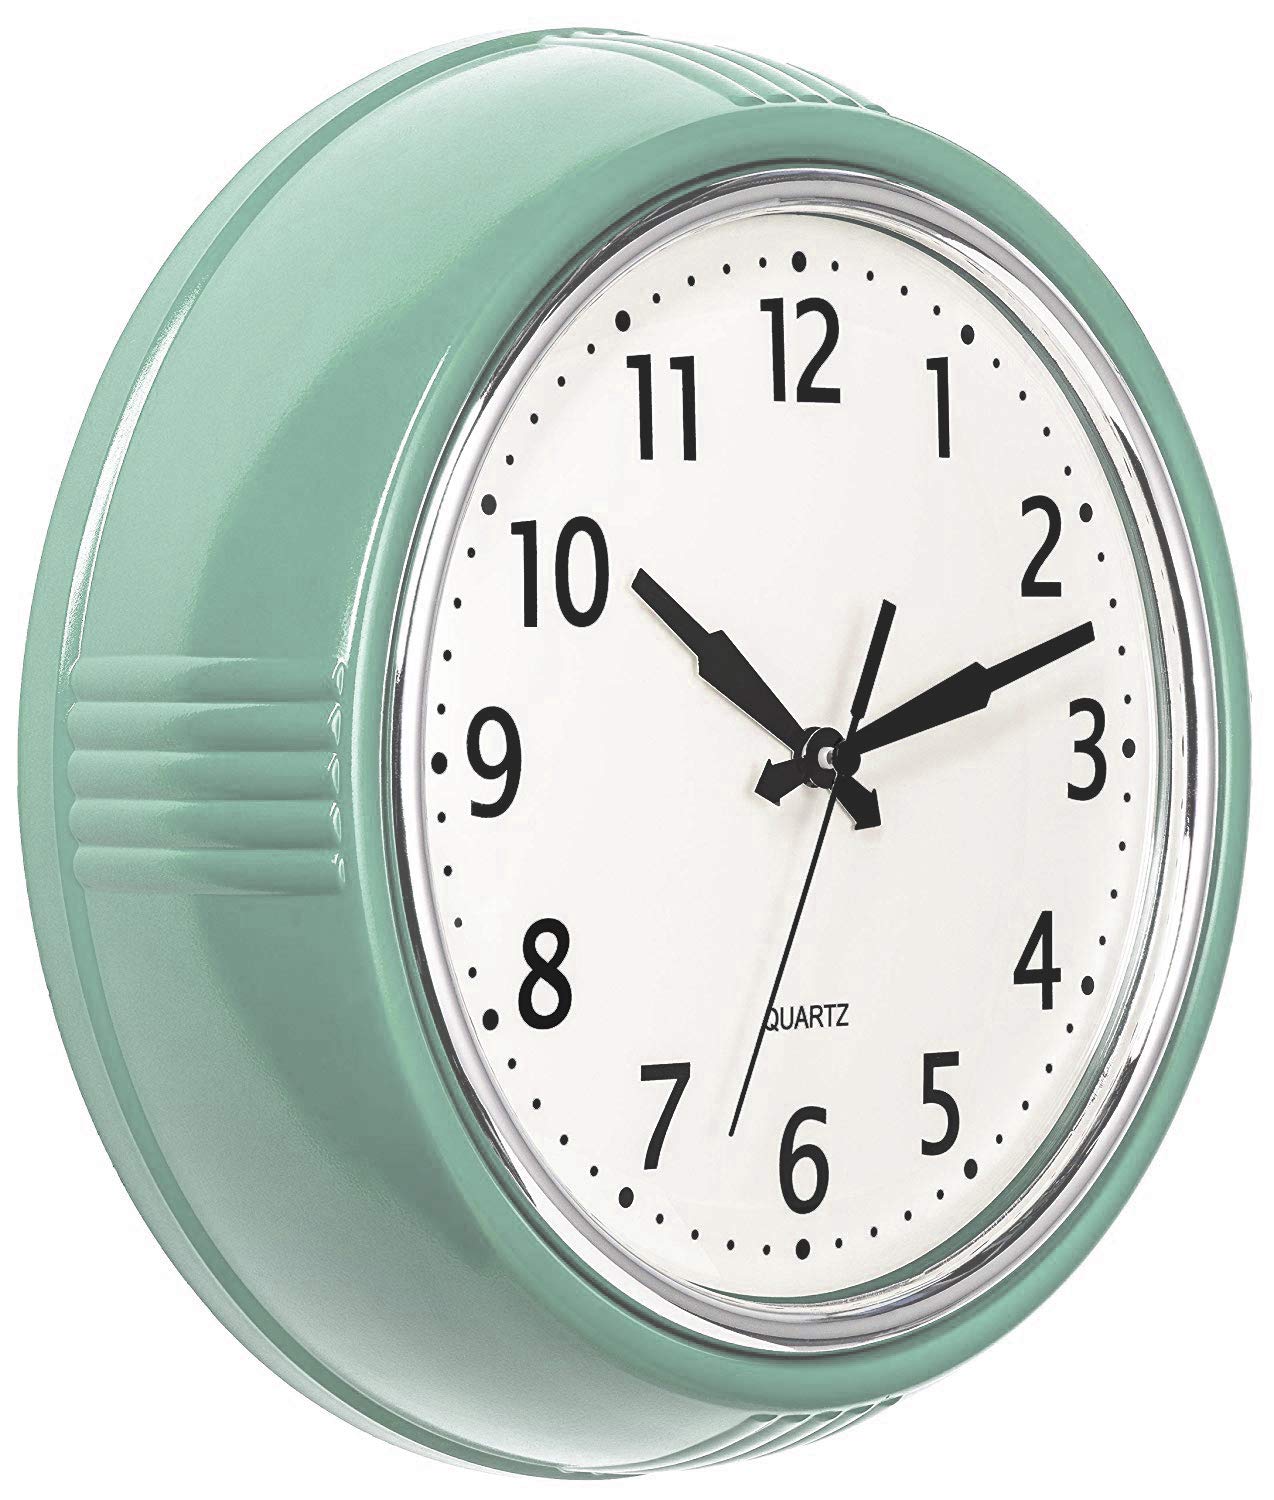 Bernhard Products Retro Wall Clock